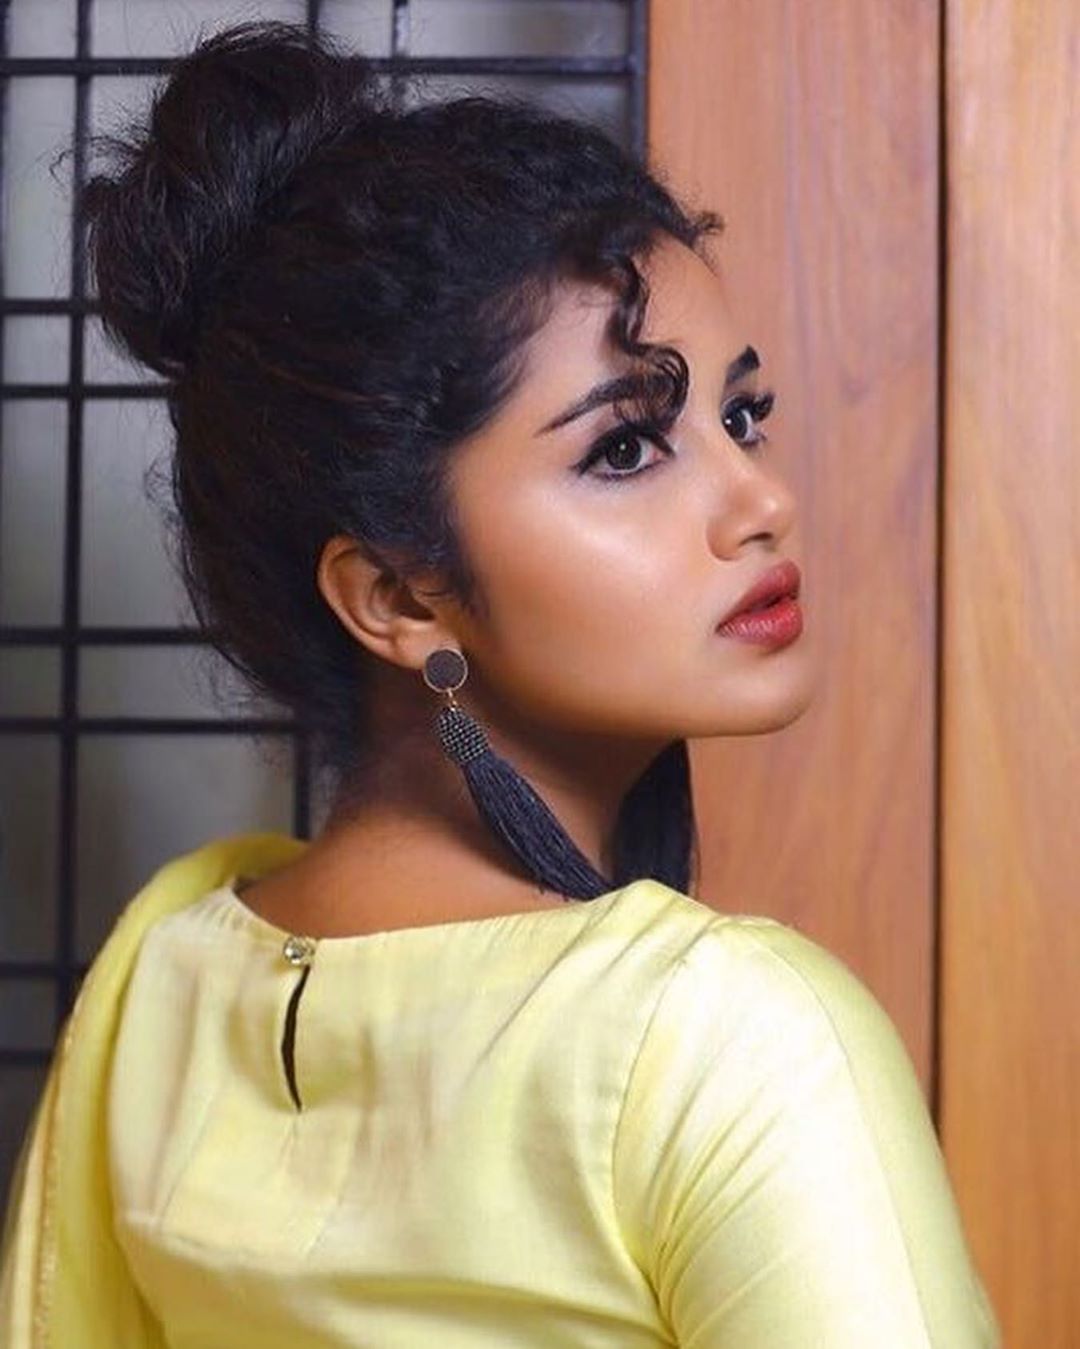 Anupama Parameswaran Shows Her Hot Curves In Side View